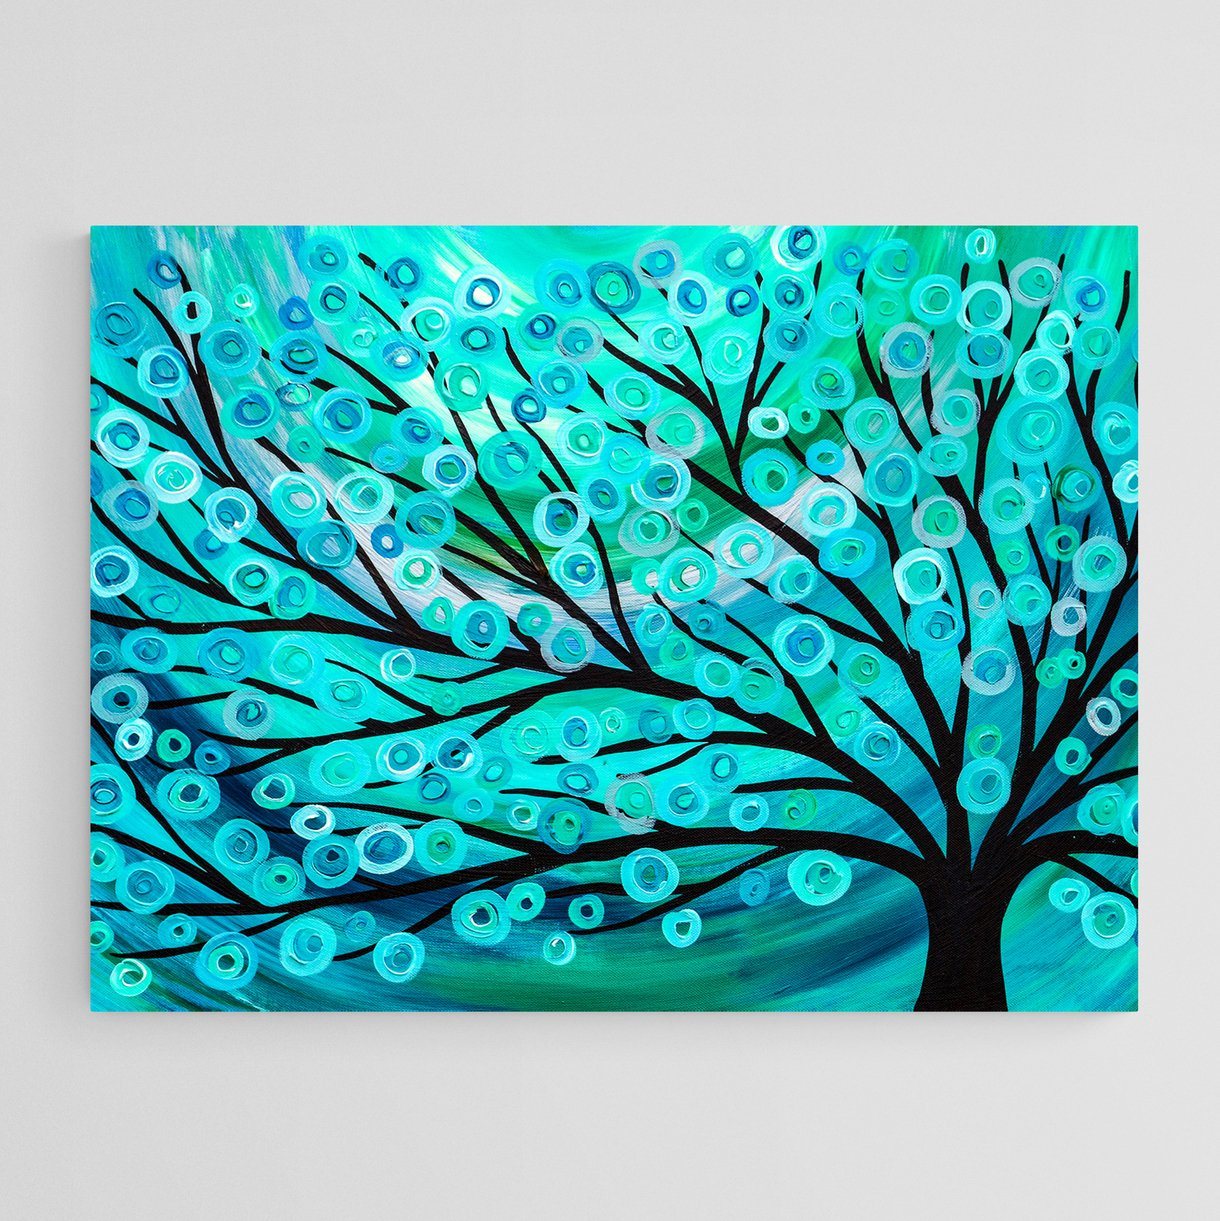 Teal & Turquoise Tree Canvas Print